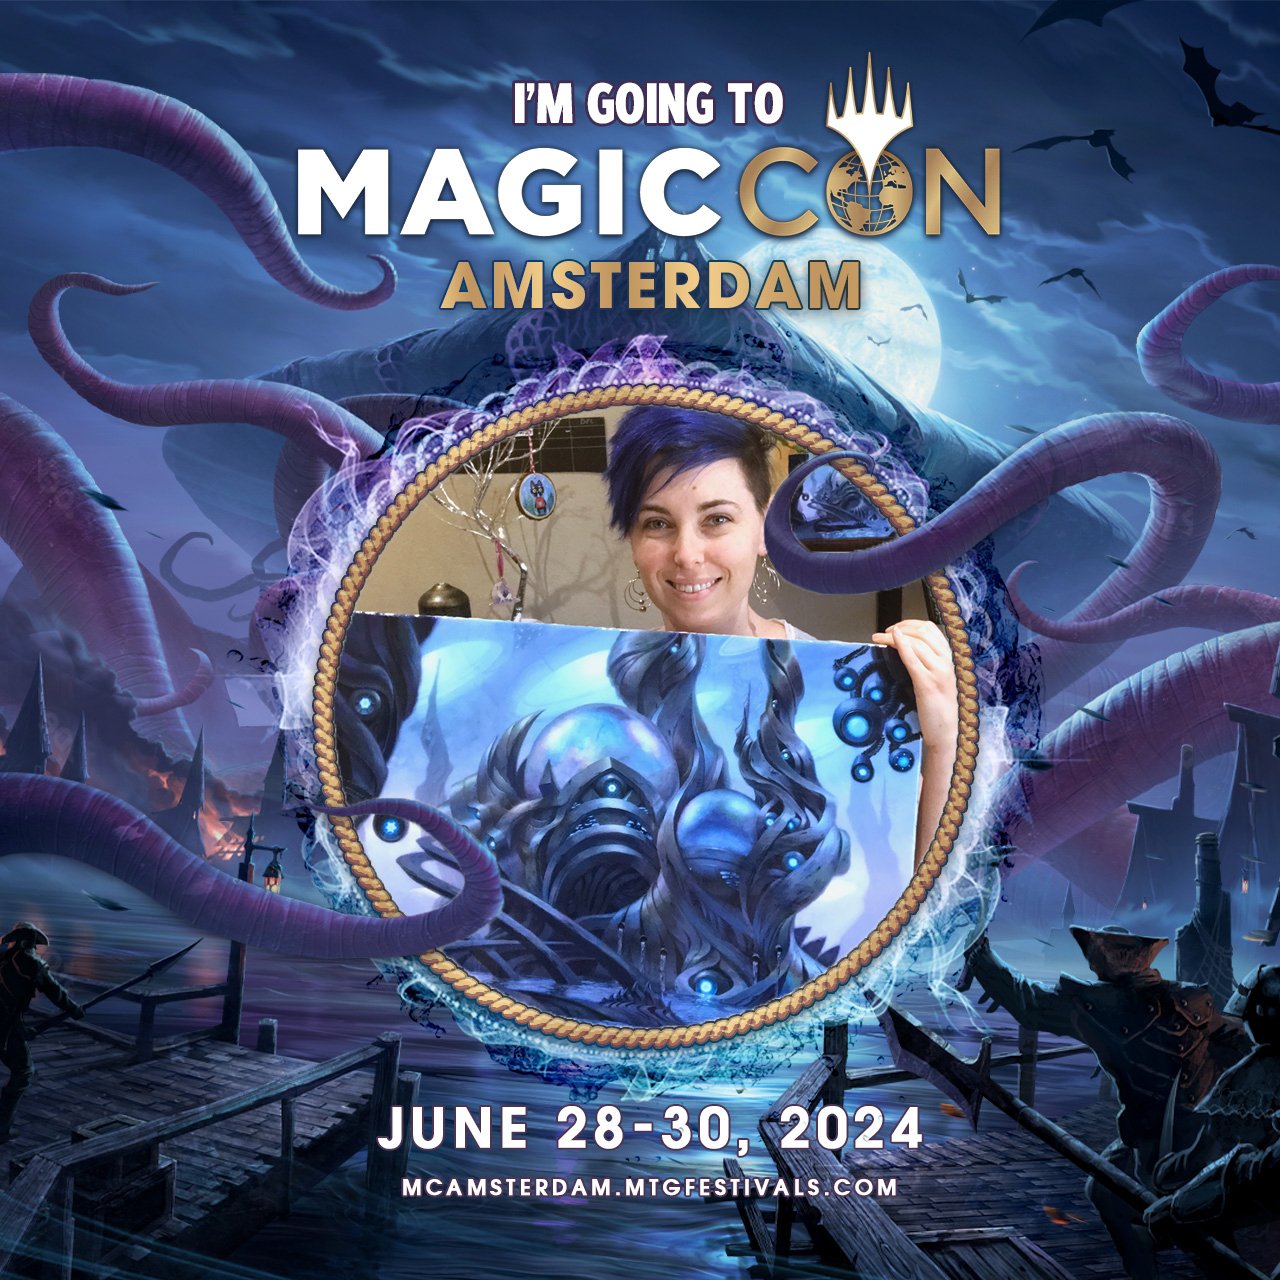 Who's heading to Amsterdam this summer for MagicCon? It'll be my first big MTG event! 

#MCAmsterdam  #magicconamsterdam #mtg #magicthegathering #magiccon #mtgitalia #mtgita #sarahfinniganart